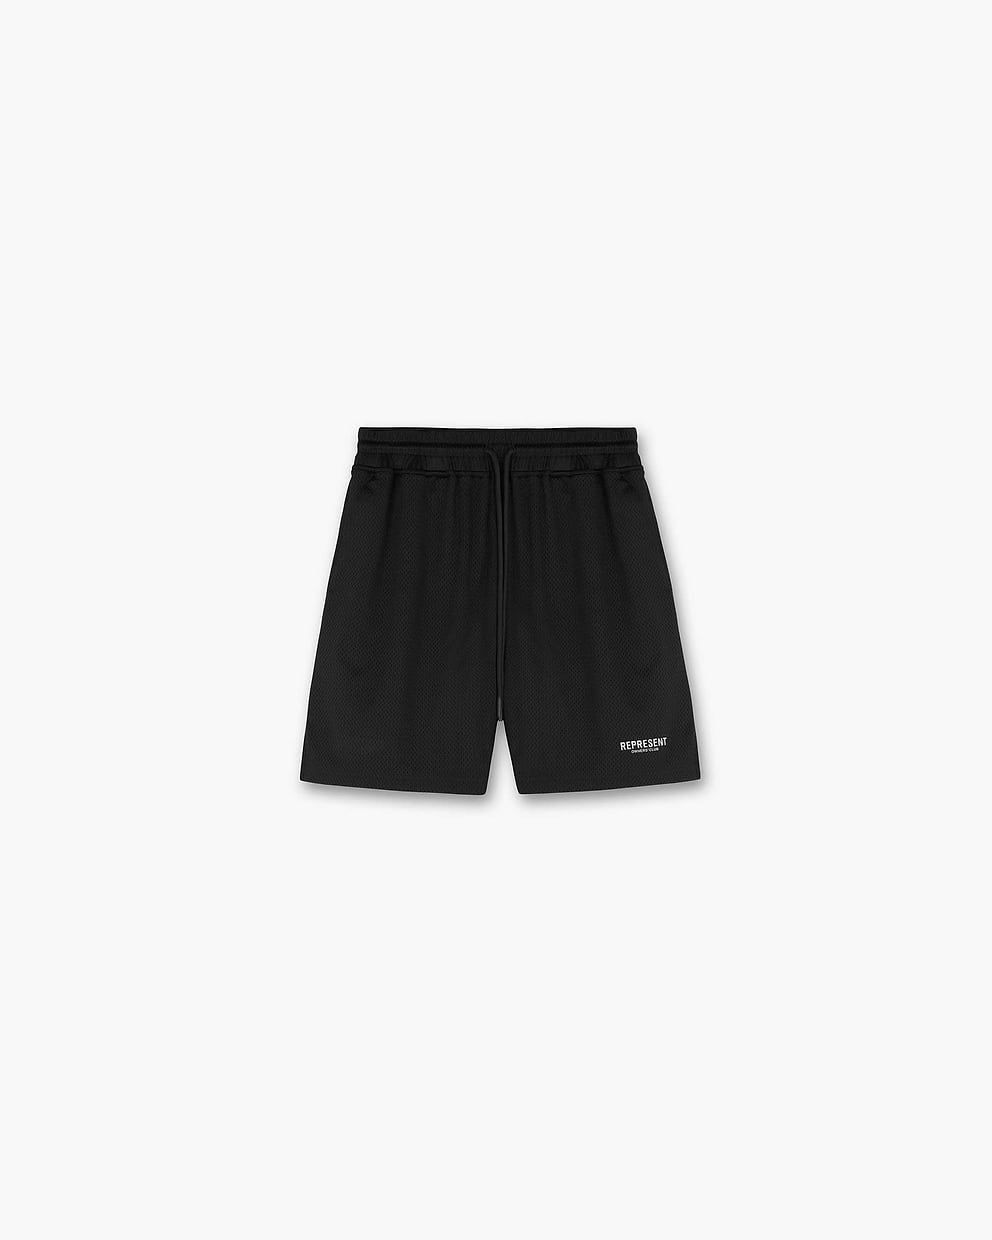 Represent Owners Club Mesh Shorts - Black